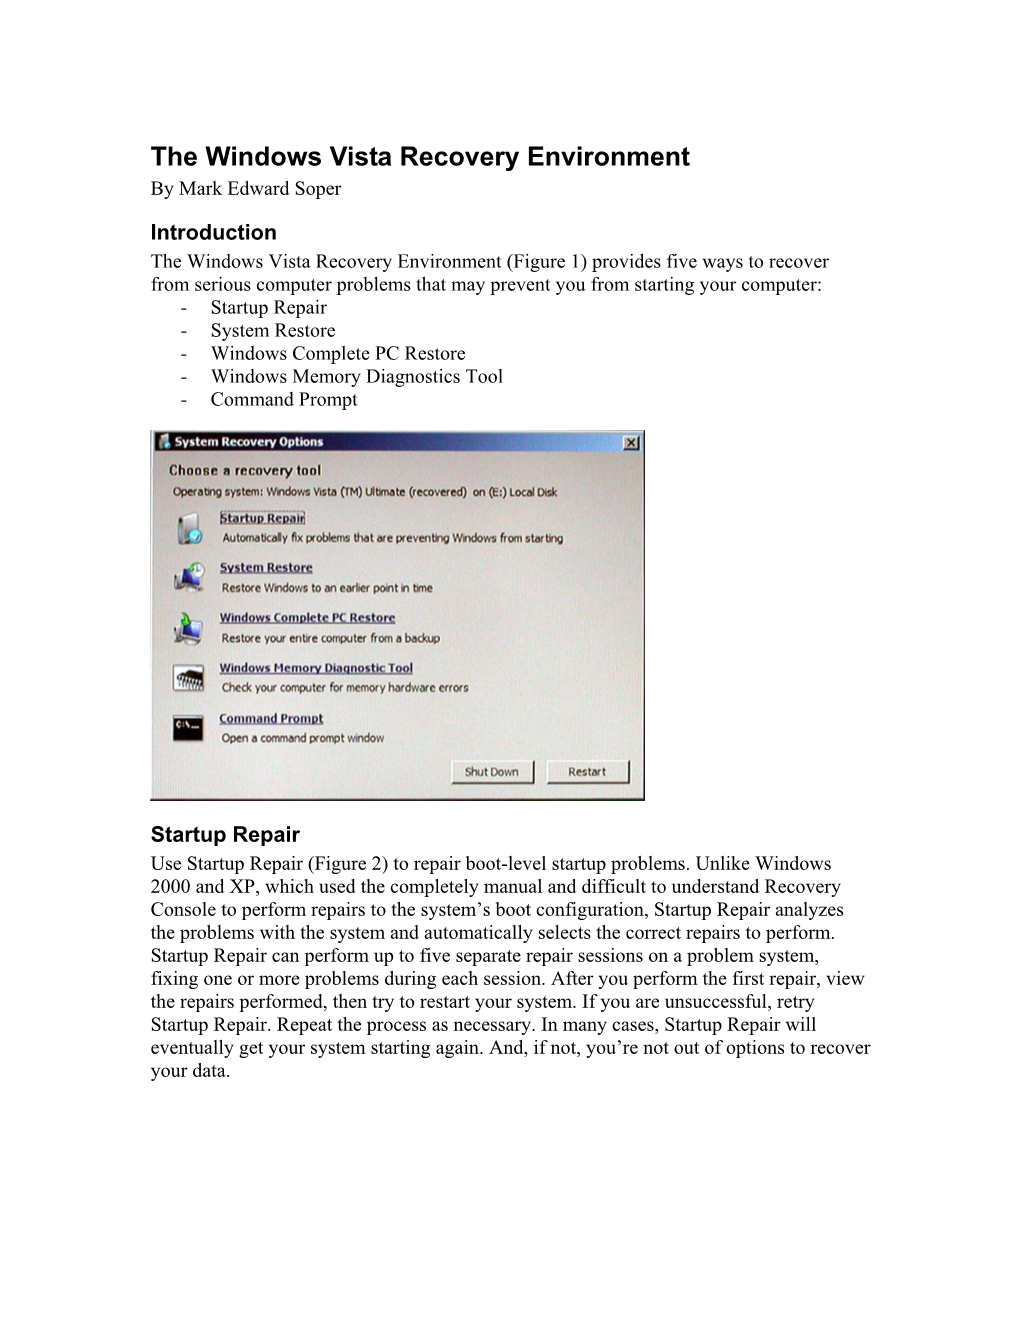 Using the Windows Vista Recovery Environment